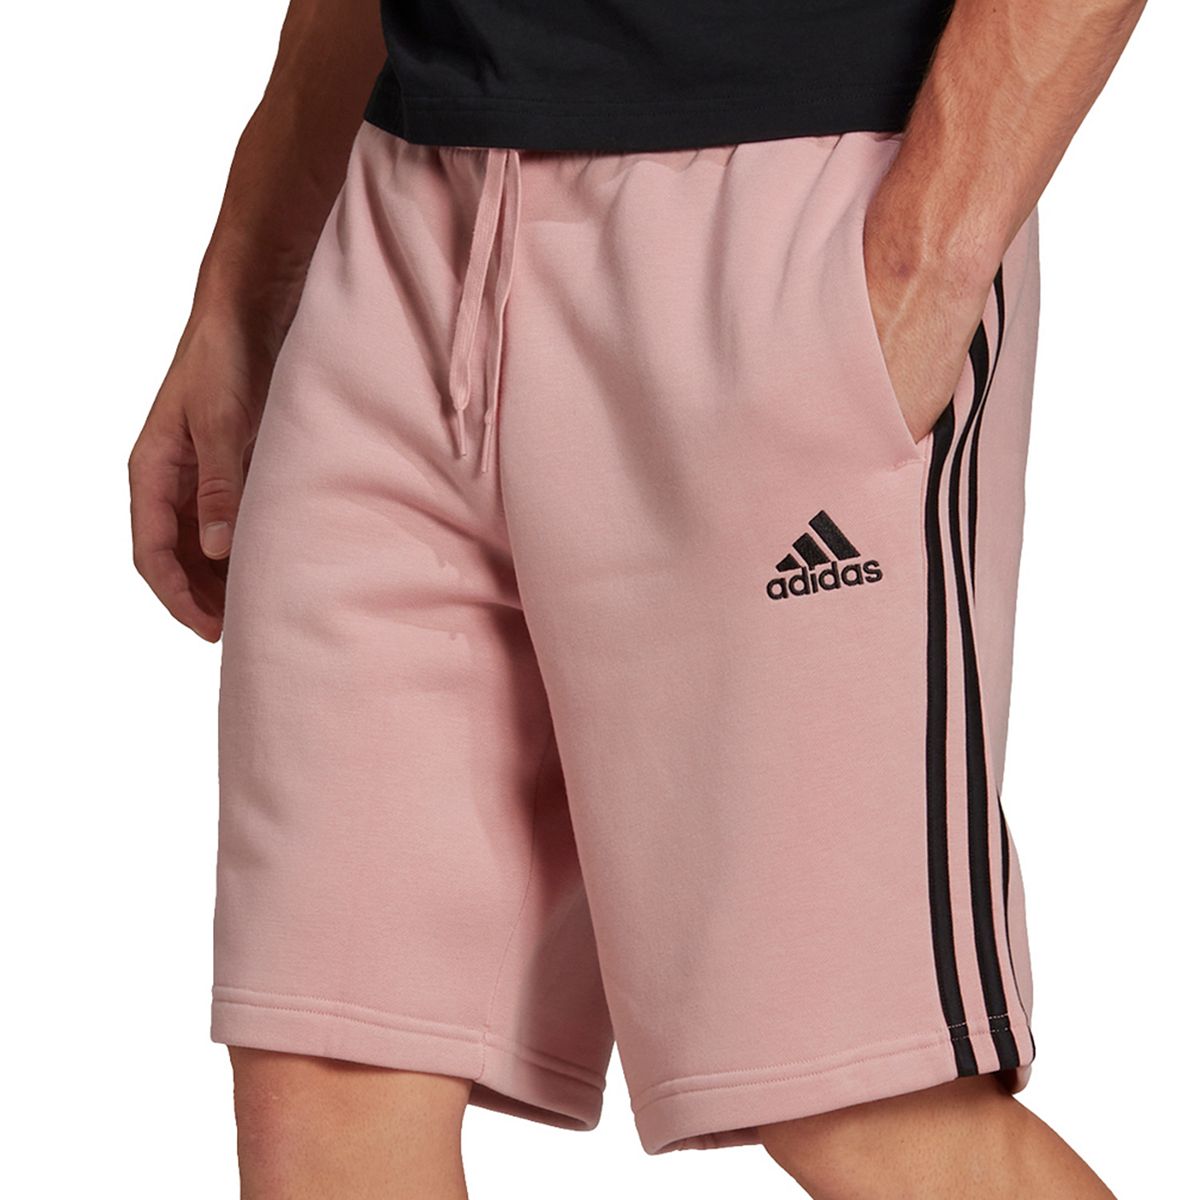 adidas Men's 3-Stripe Fleece Shorts (Wonder Mauve Black, Size Small-Large) $7 + Free Shipping on Orders $49+